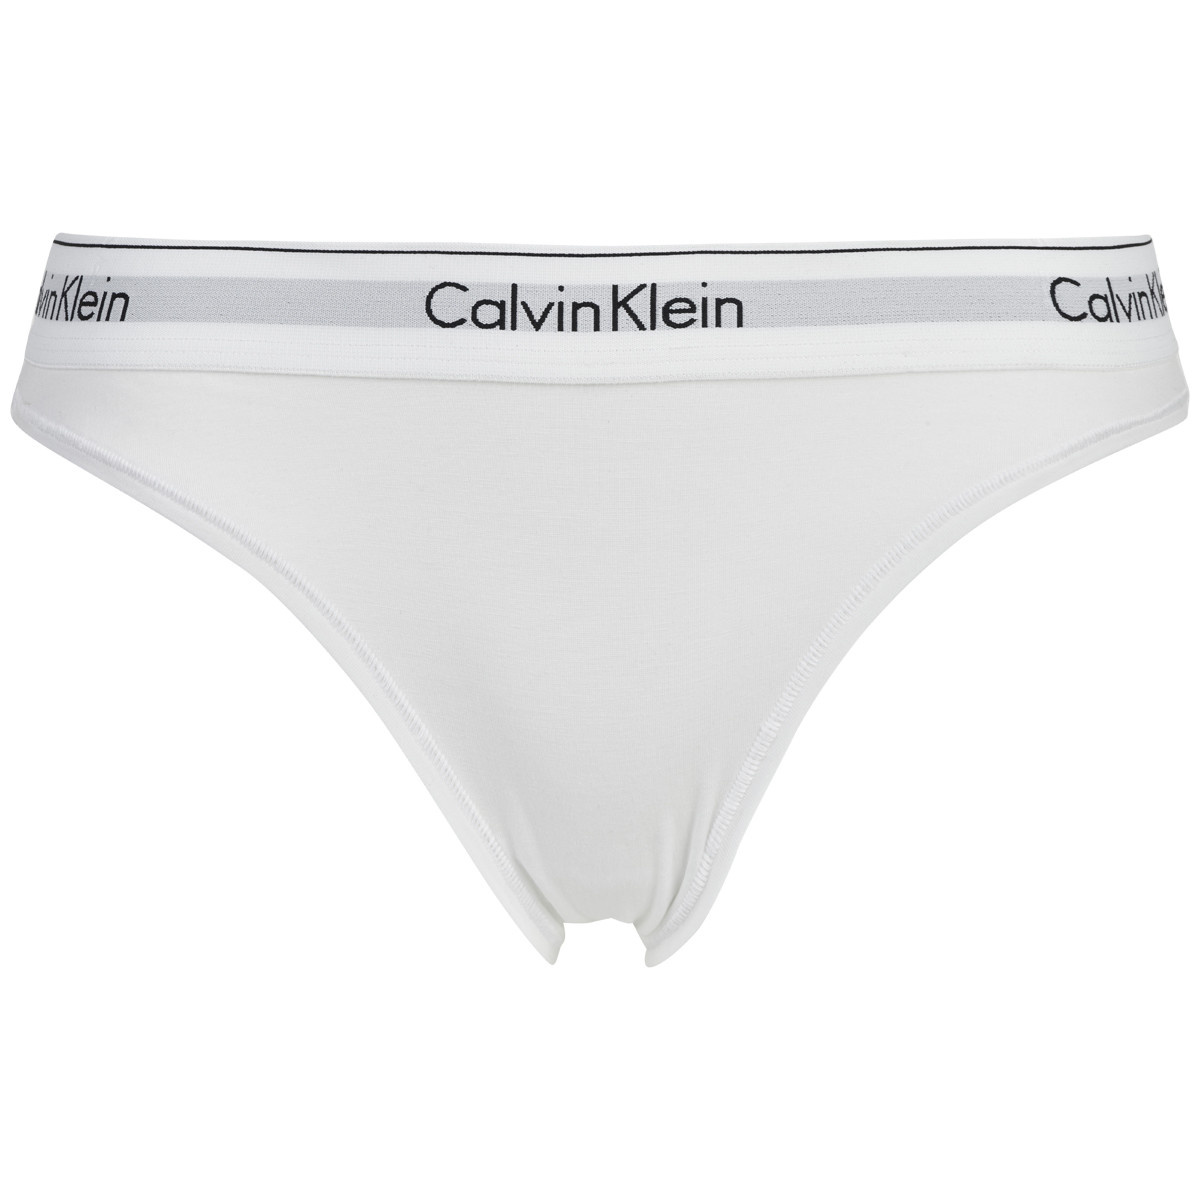 Se Calvin Klein Lingeri Tai Trusse, Farve: Hvid, Størrelse: L, Dame hos Netlingeri.dk